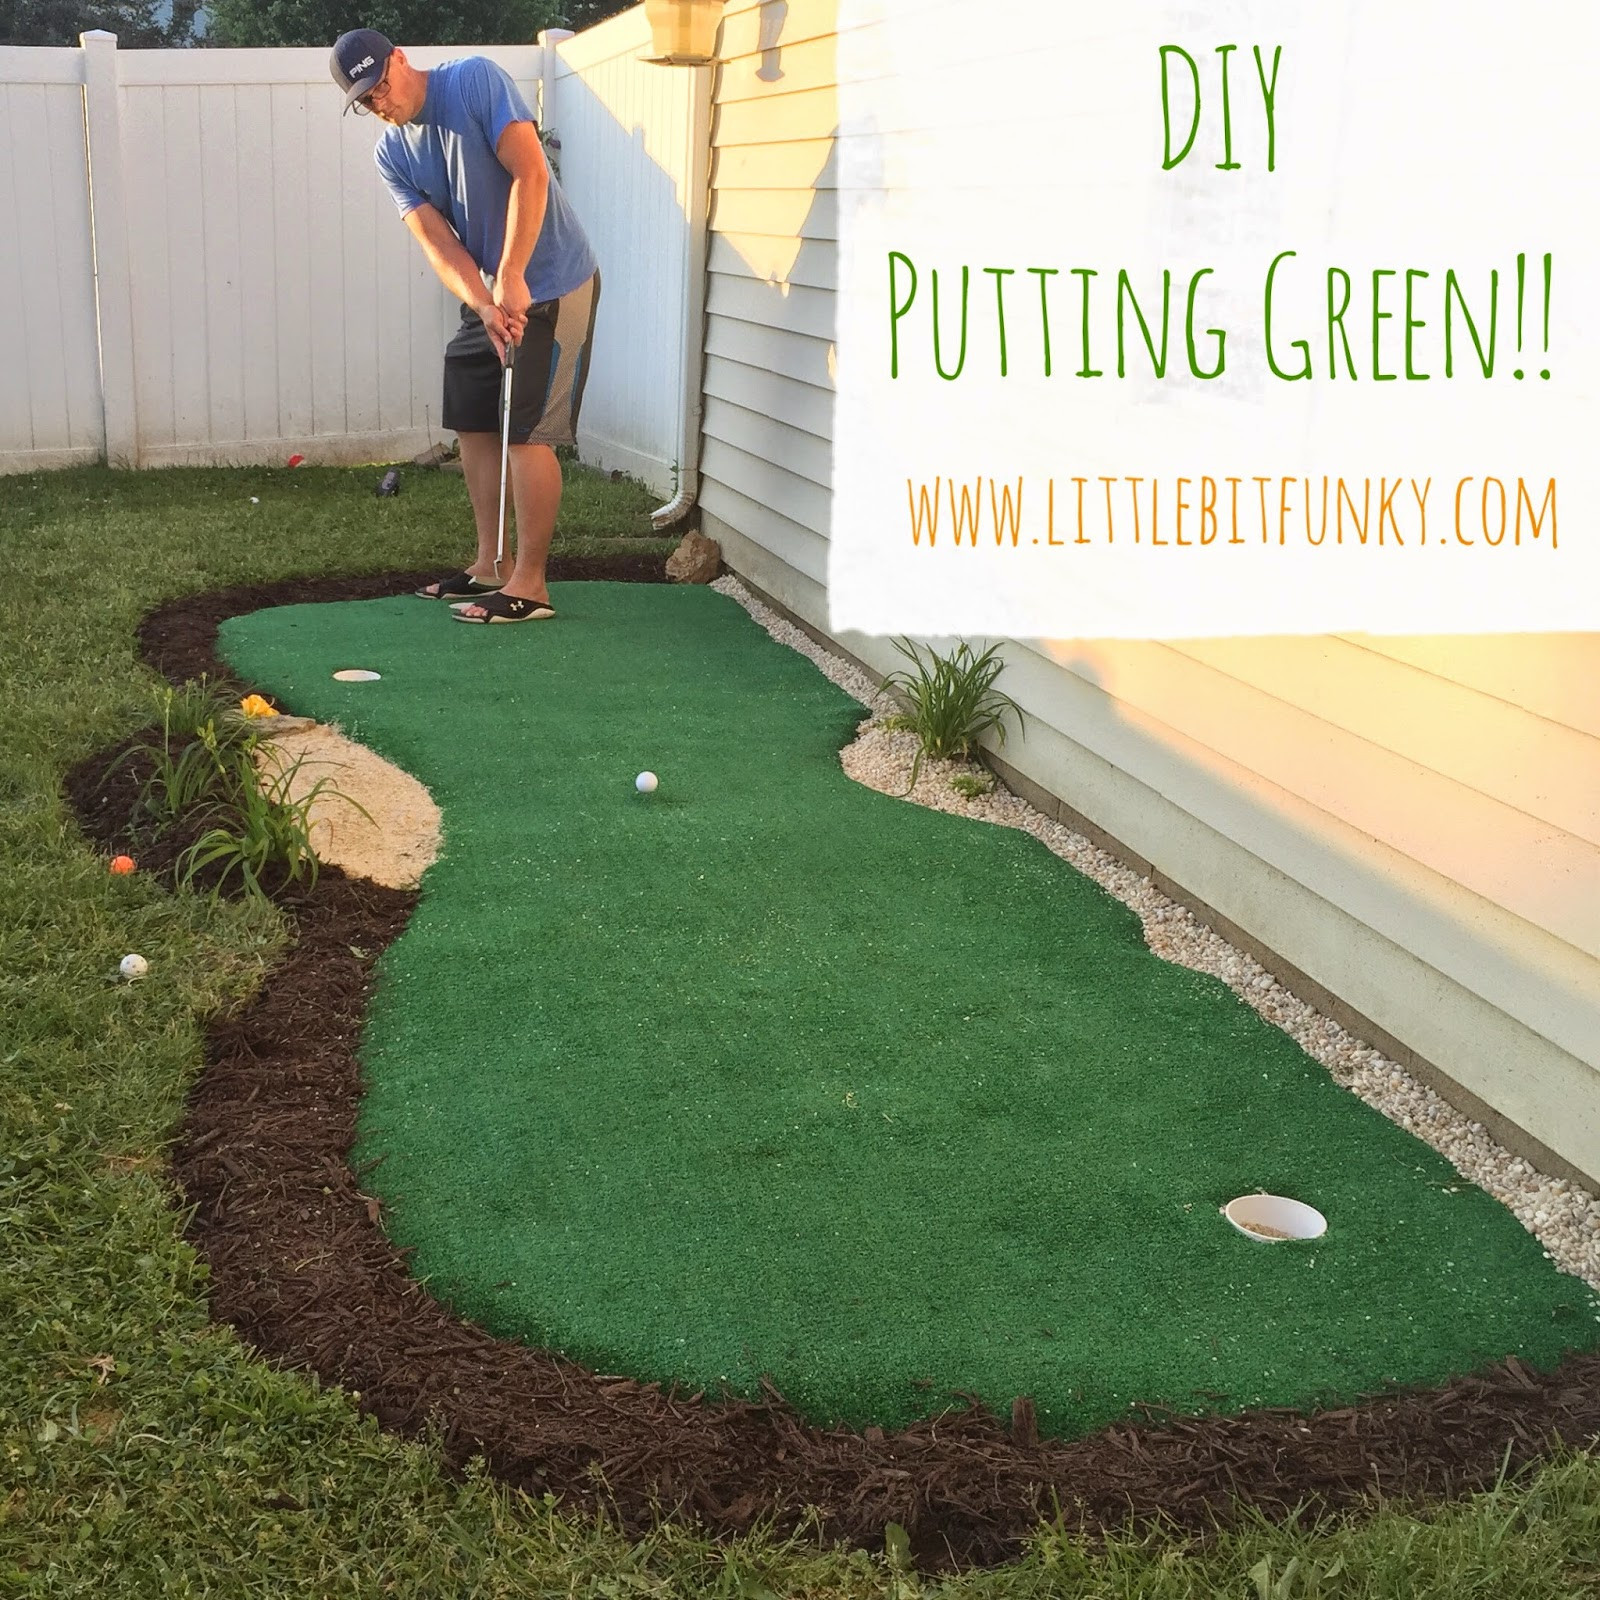 DIY Outdoor Putting Green
 Little Bit Funky How to make a backyard putting green